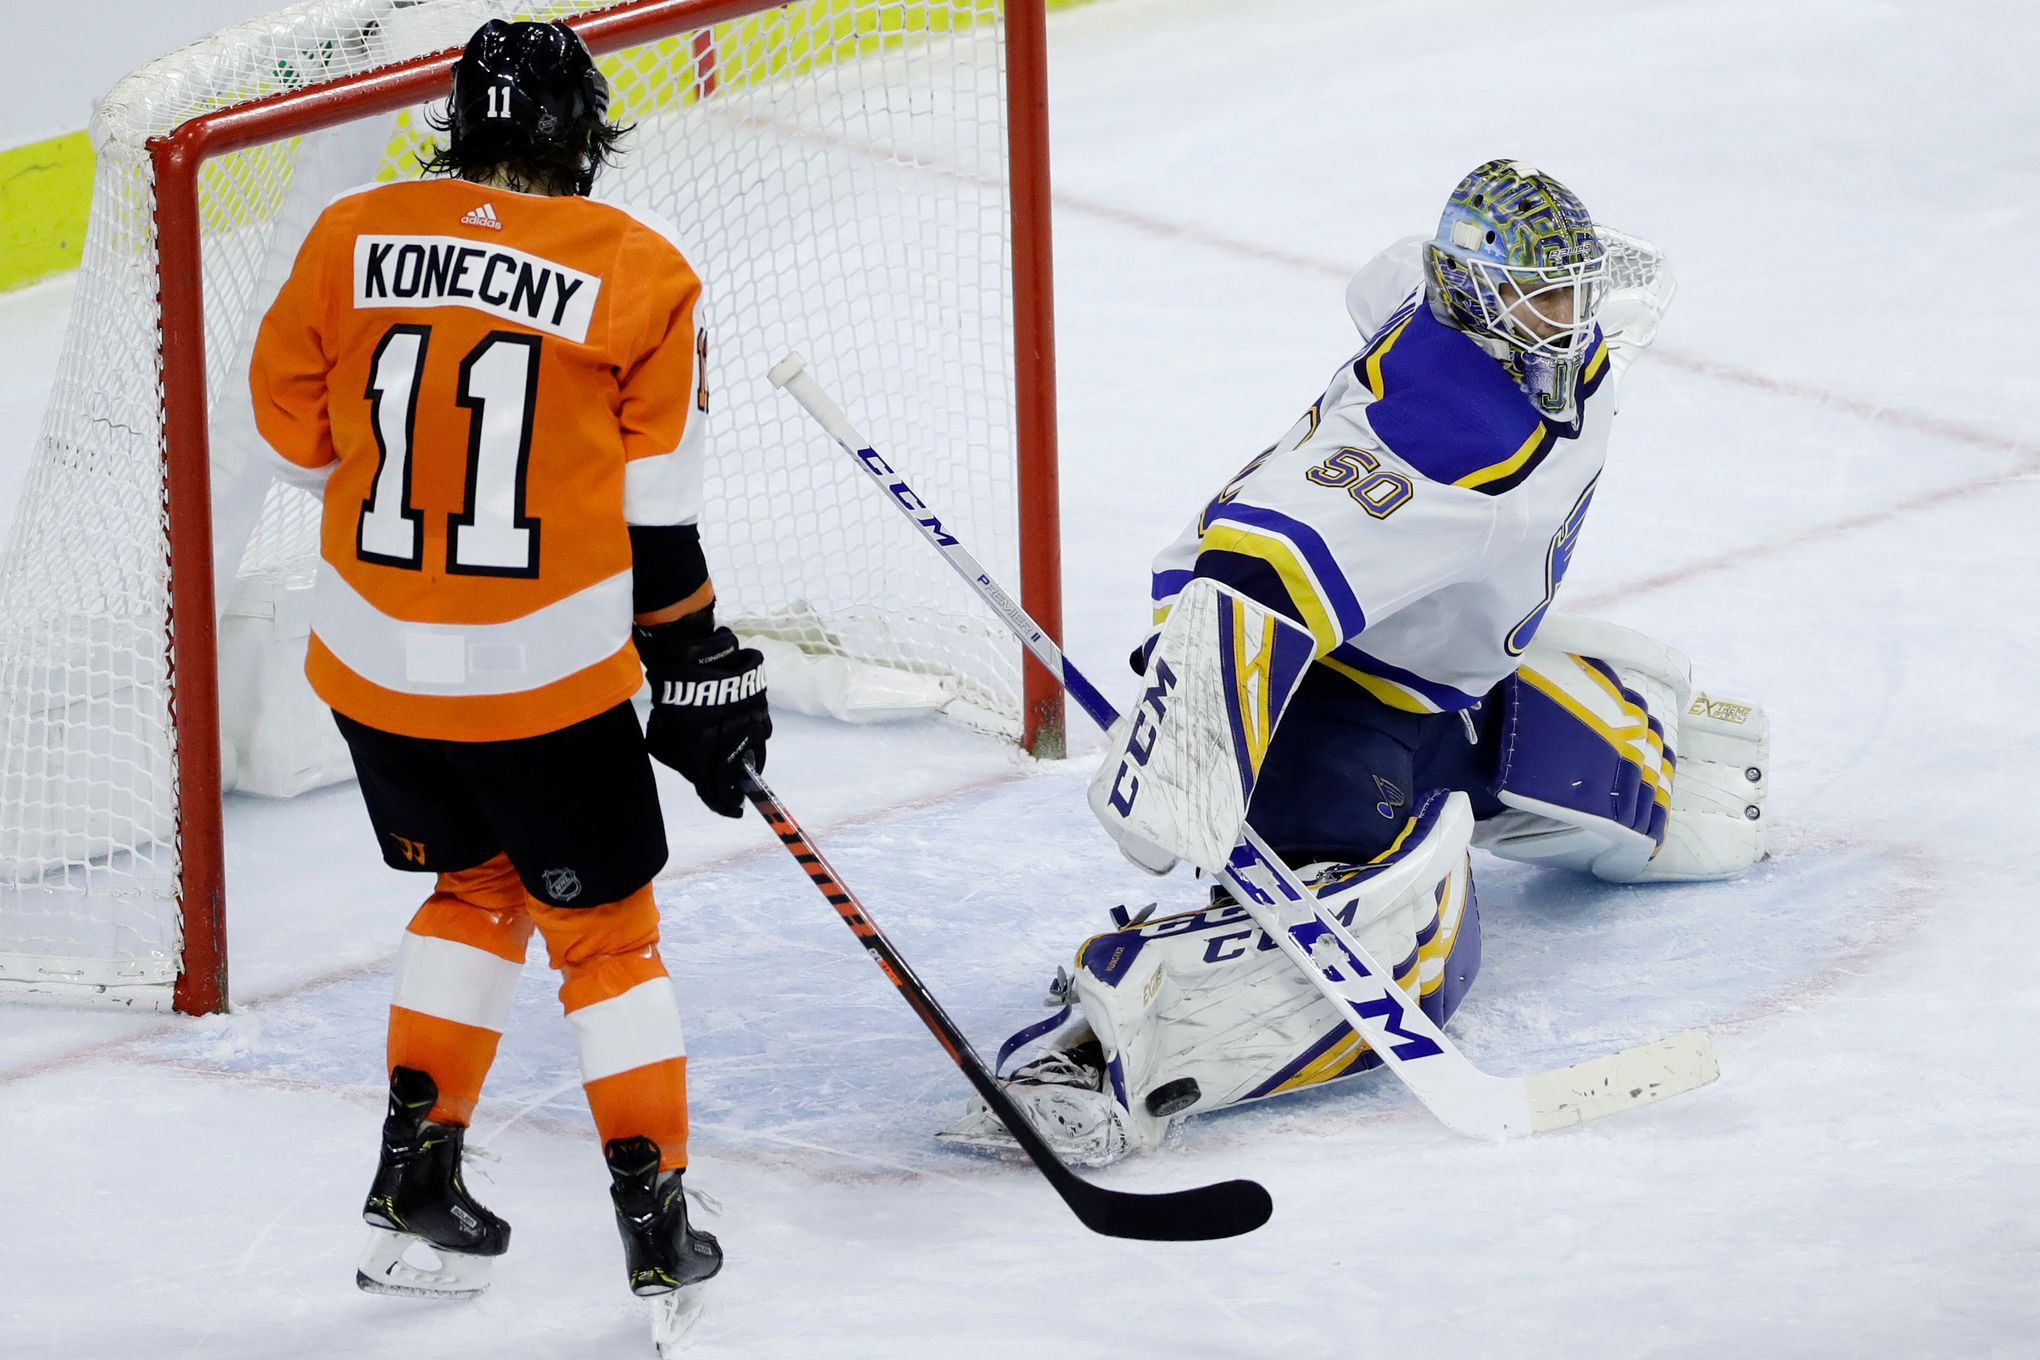 Blues' Binnington shuts out Flyers in 1st NHL start